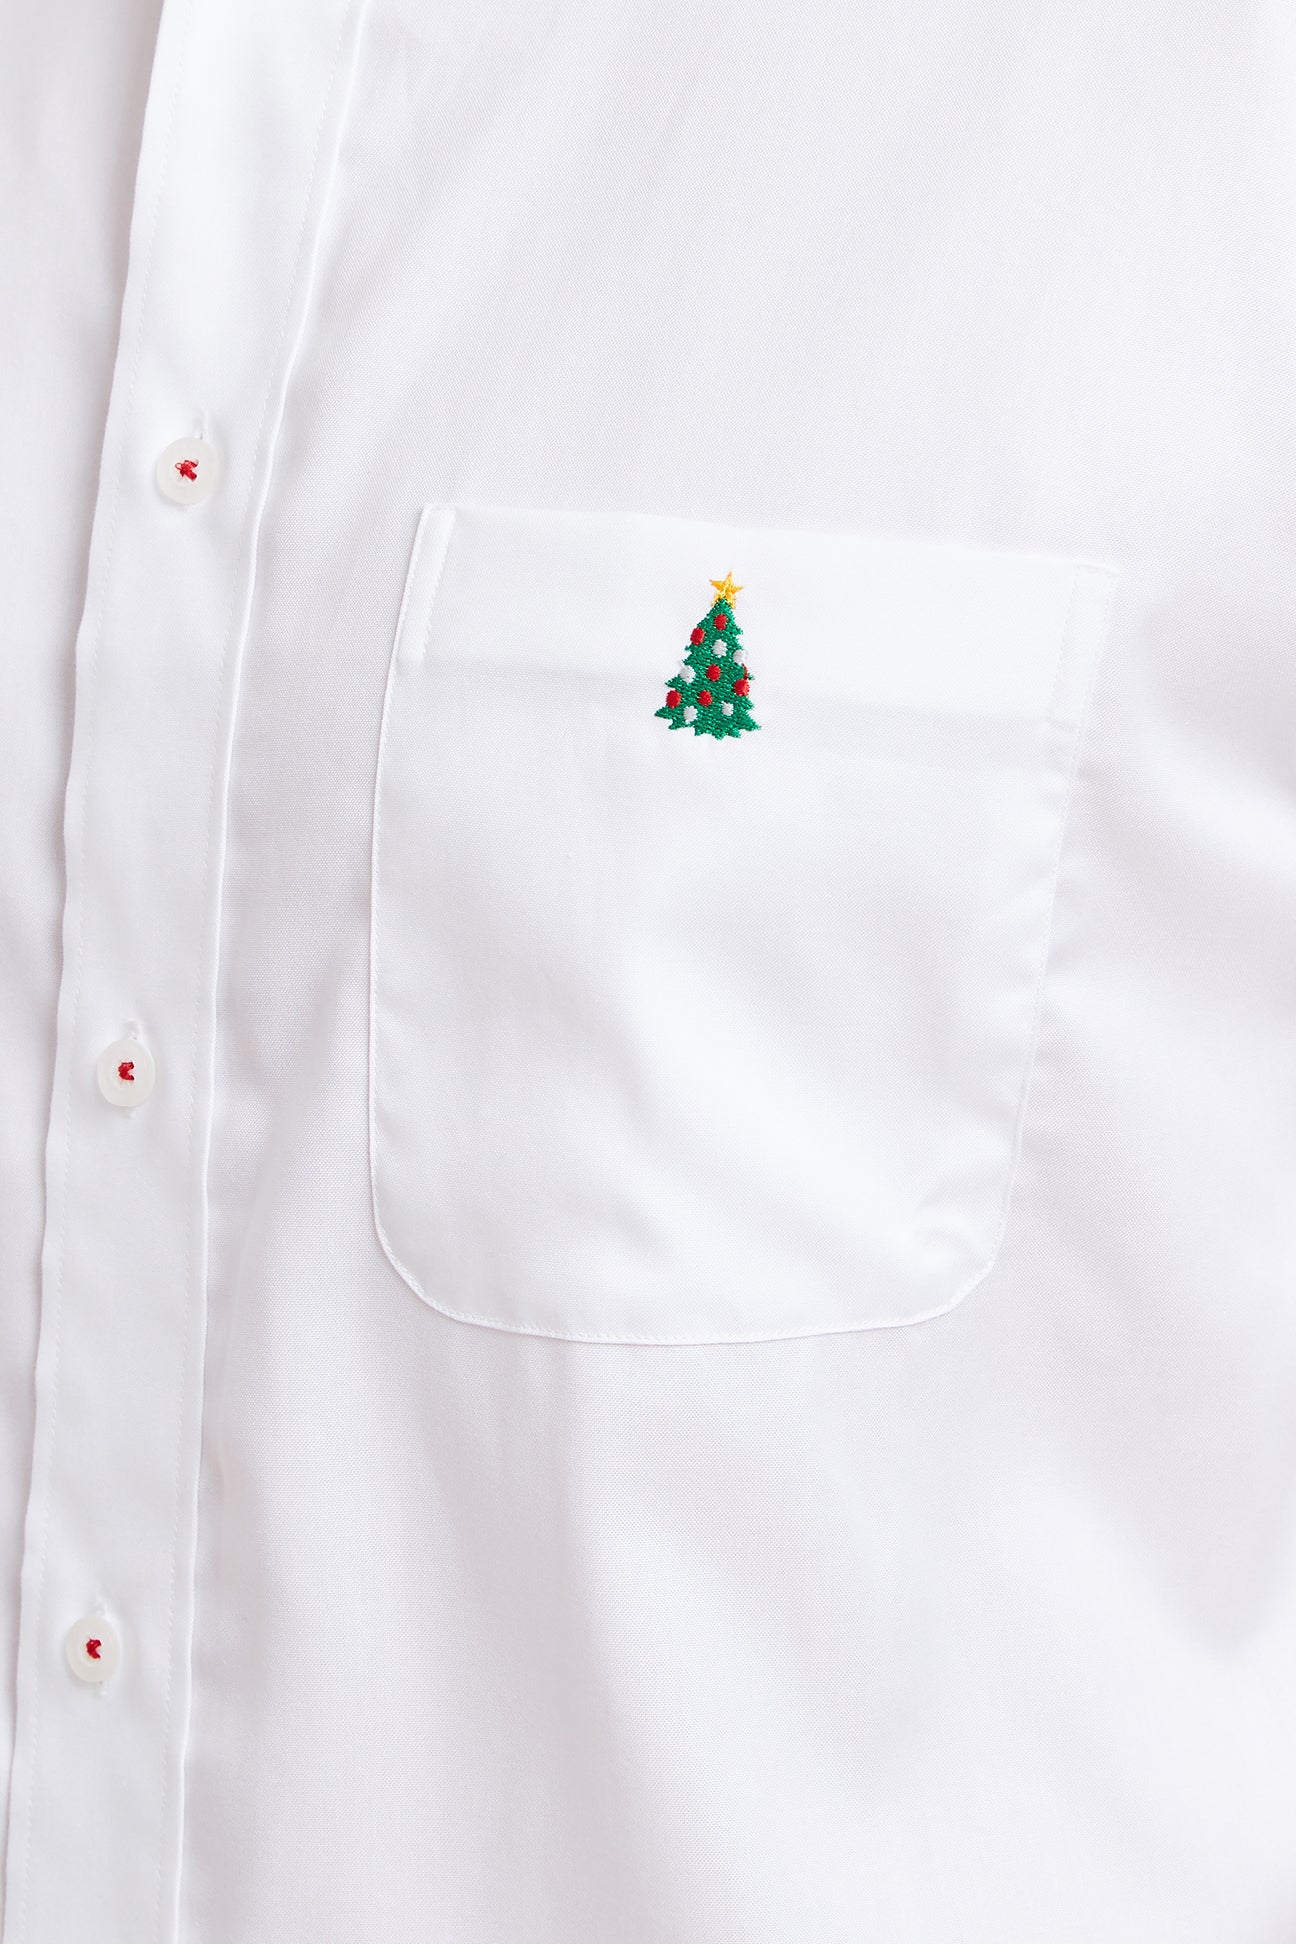 Chase Shirt White Oxford with Single Christmas Tree MENS SPORT SHIRTS Castaway Nantucket Island